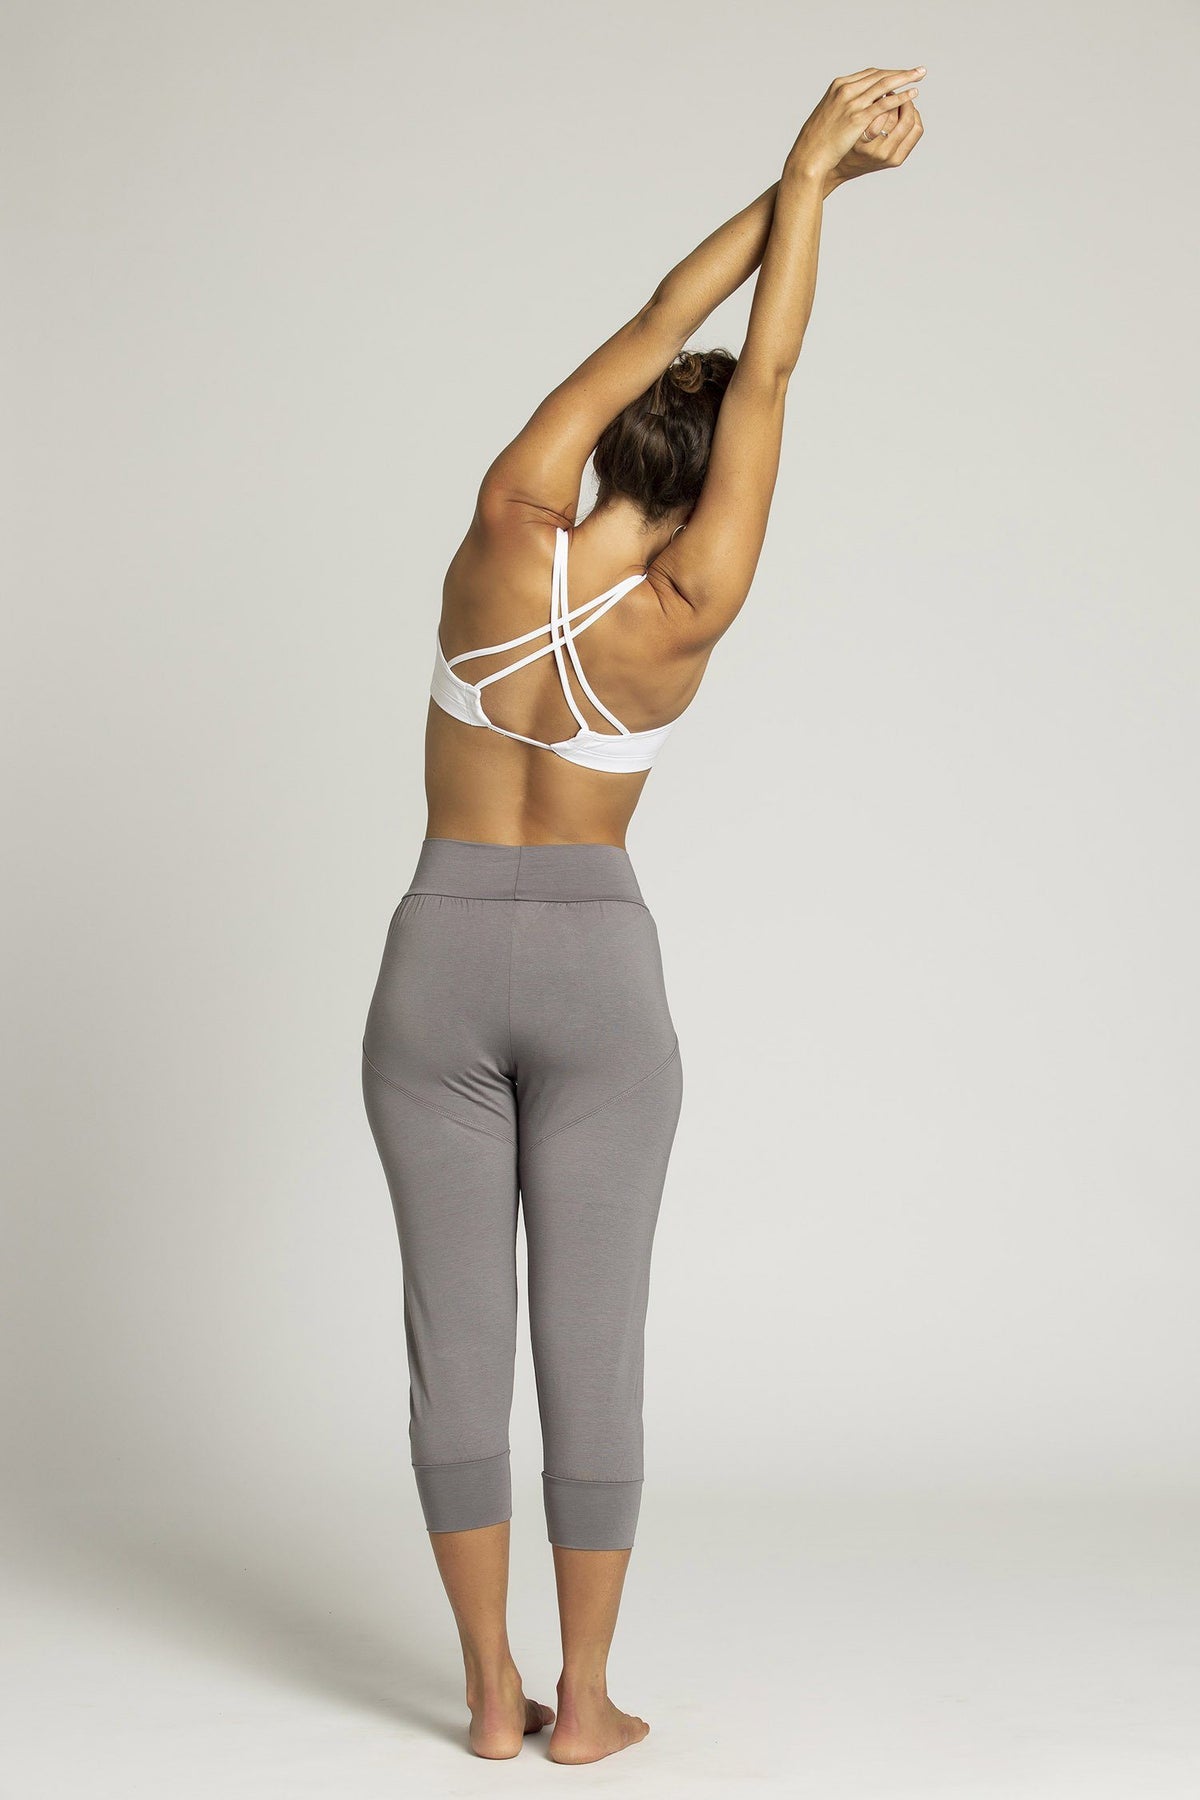 Slouchy Capri Pants - womens clothing - Ripple Yoga Wear